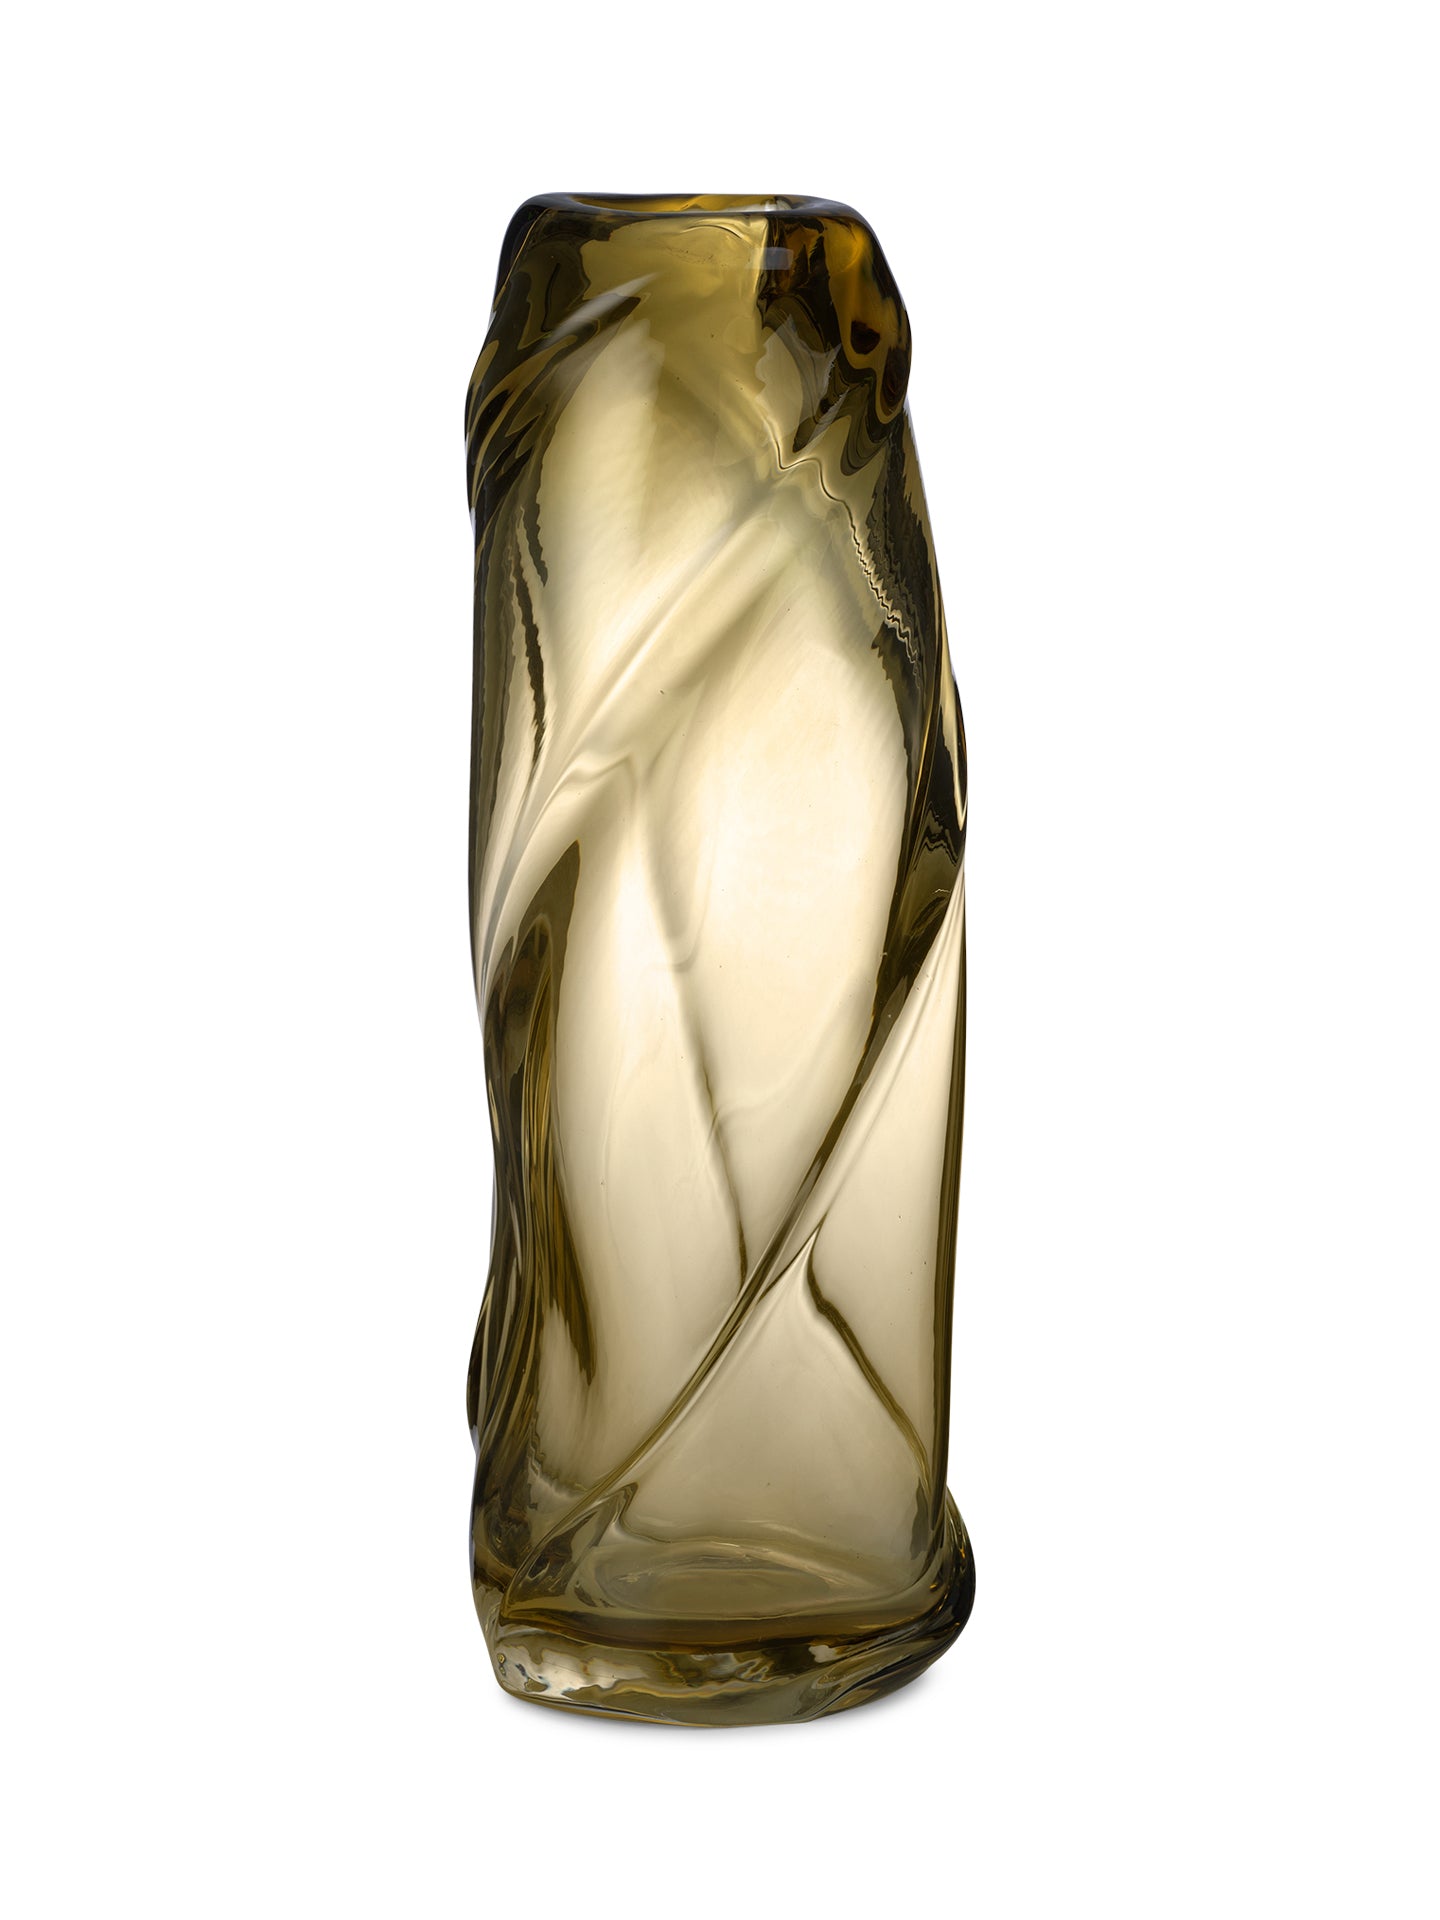 Water Swirl Vase - Tall